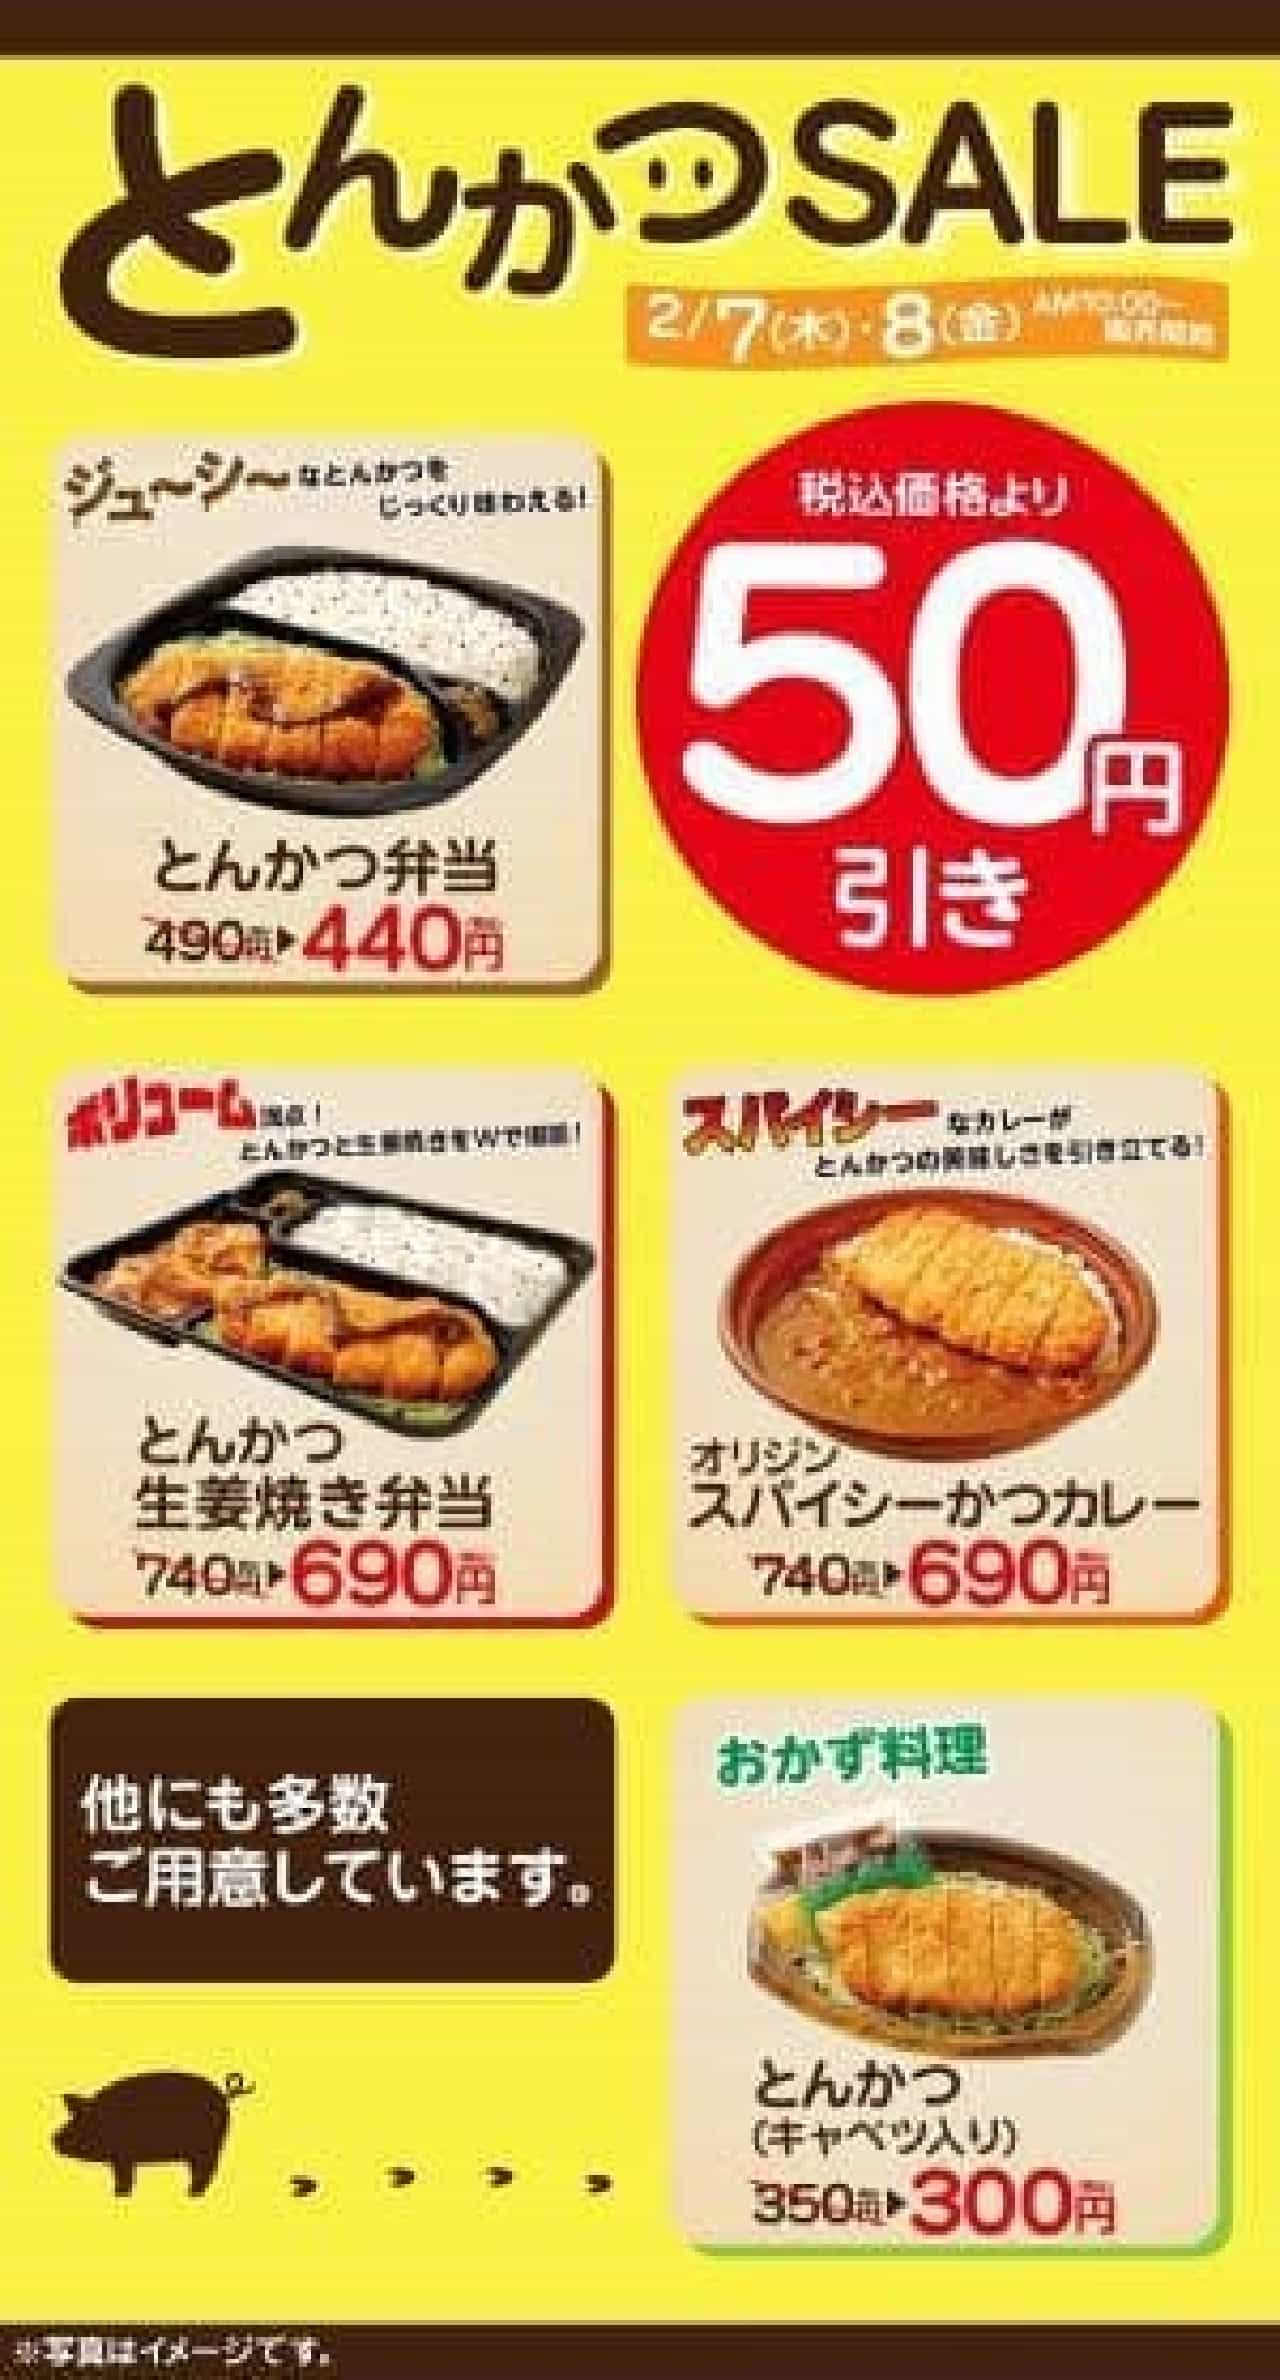 "Tonkatsu sale" with origin lunch